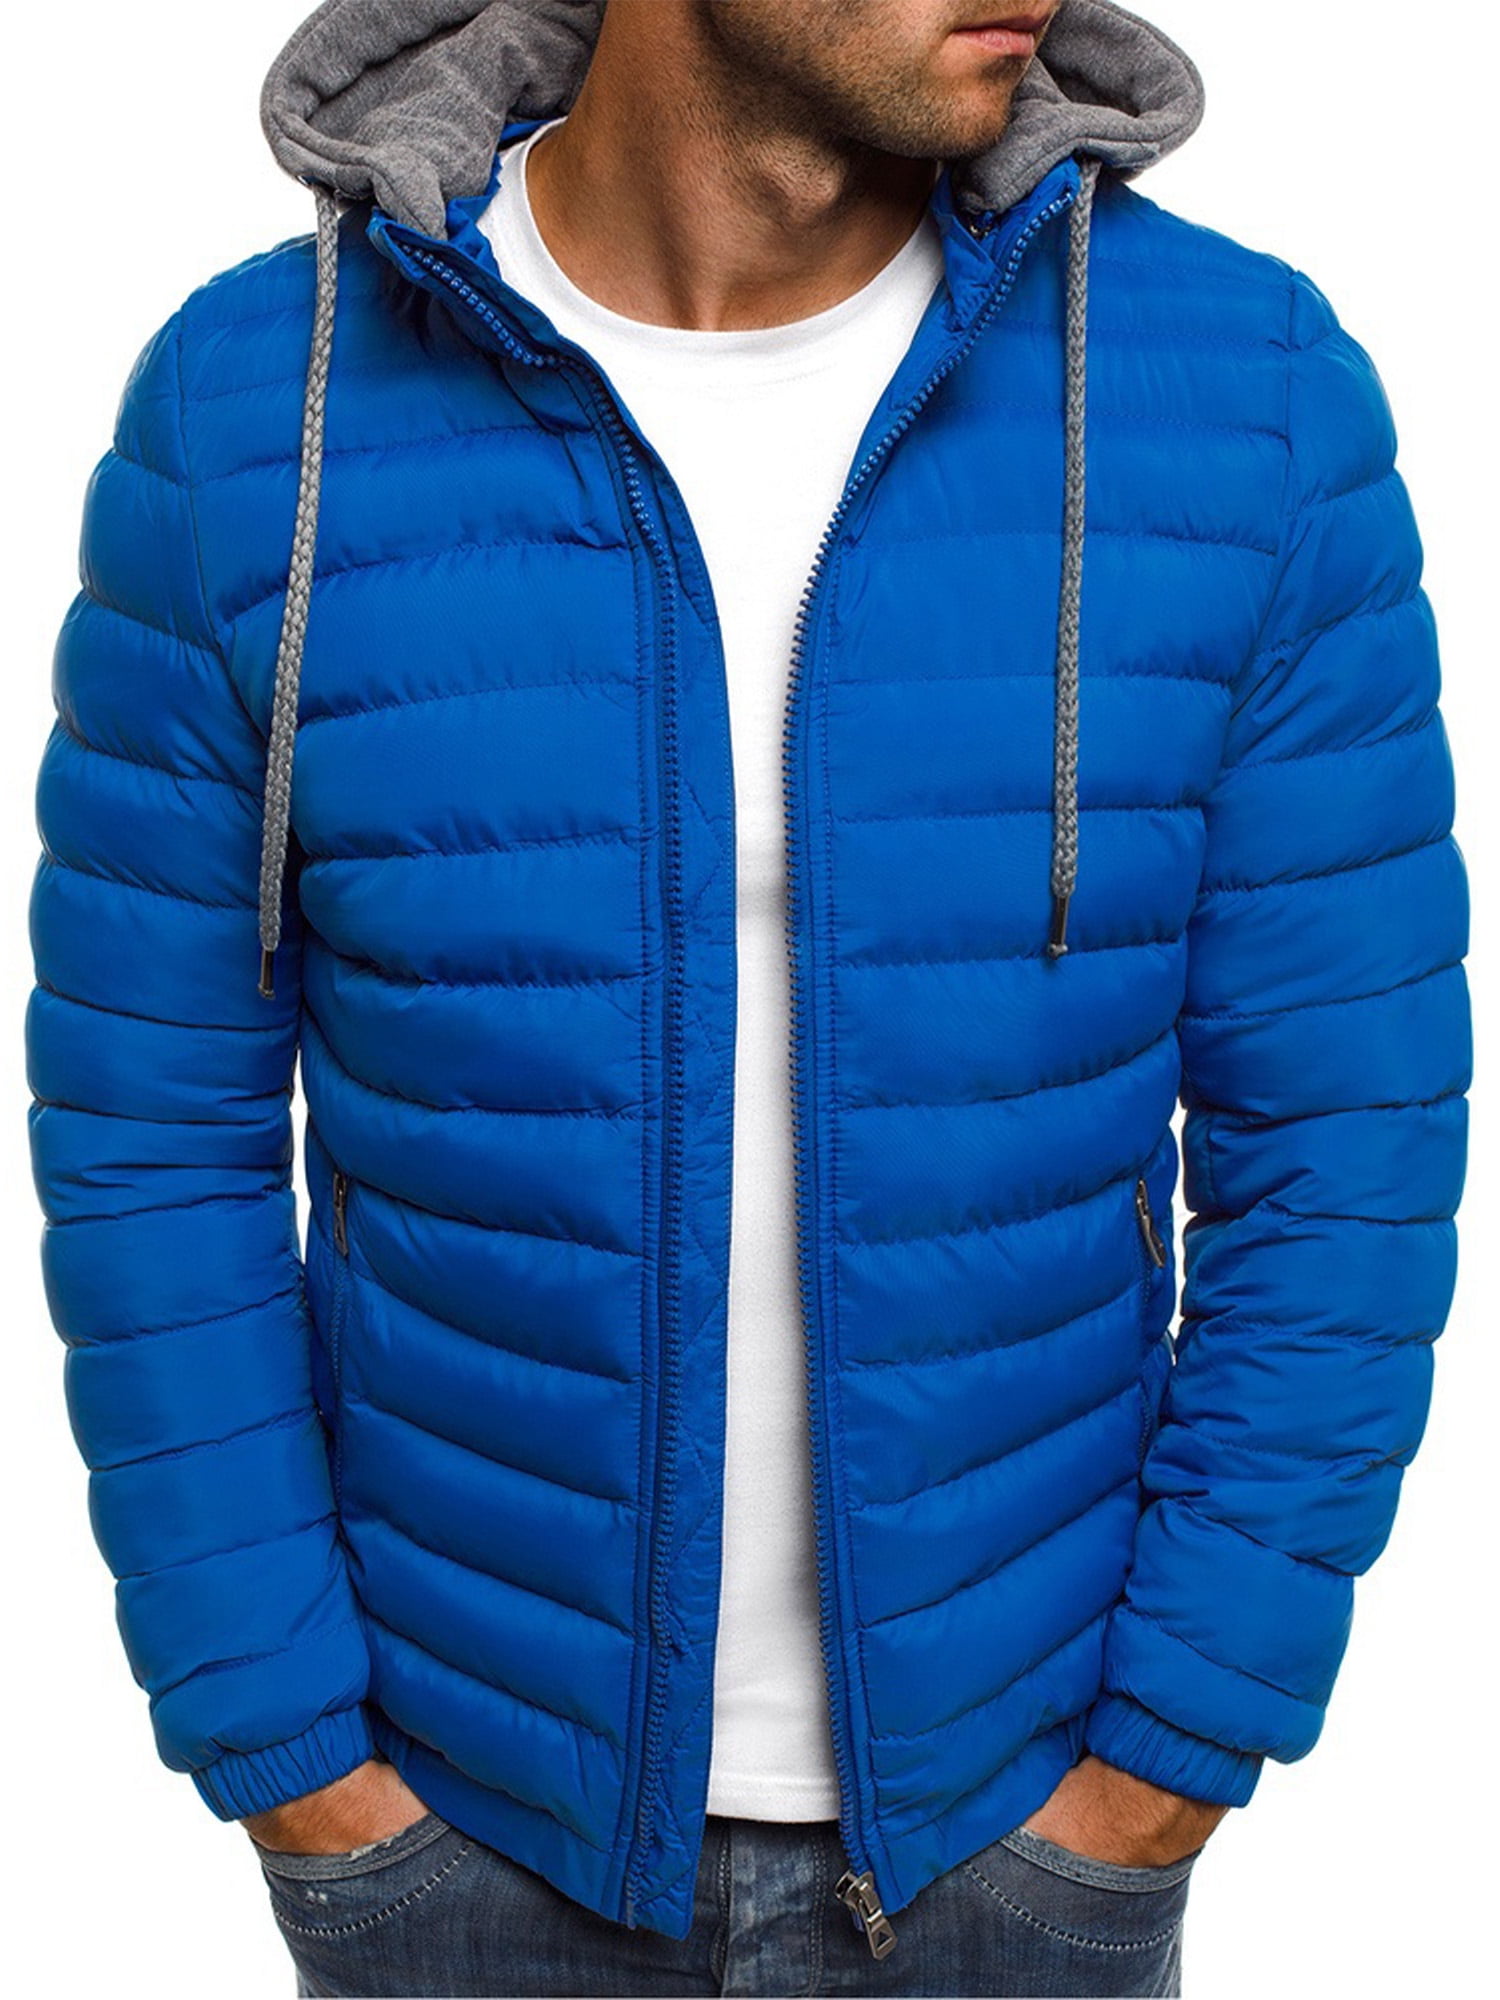 Mens Down Jacket Casual Autumn Winter Warm Long Sleeve Zipper Fleece Coat Windproof Windbreaker Raincoat Jackets